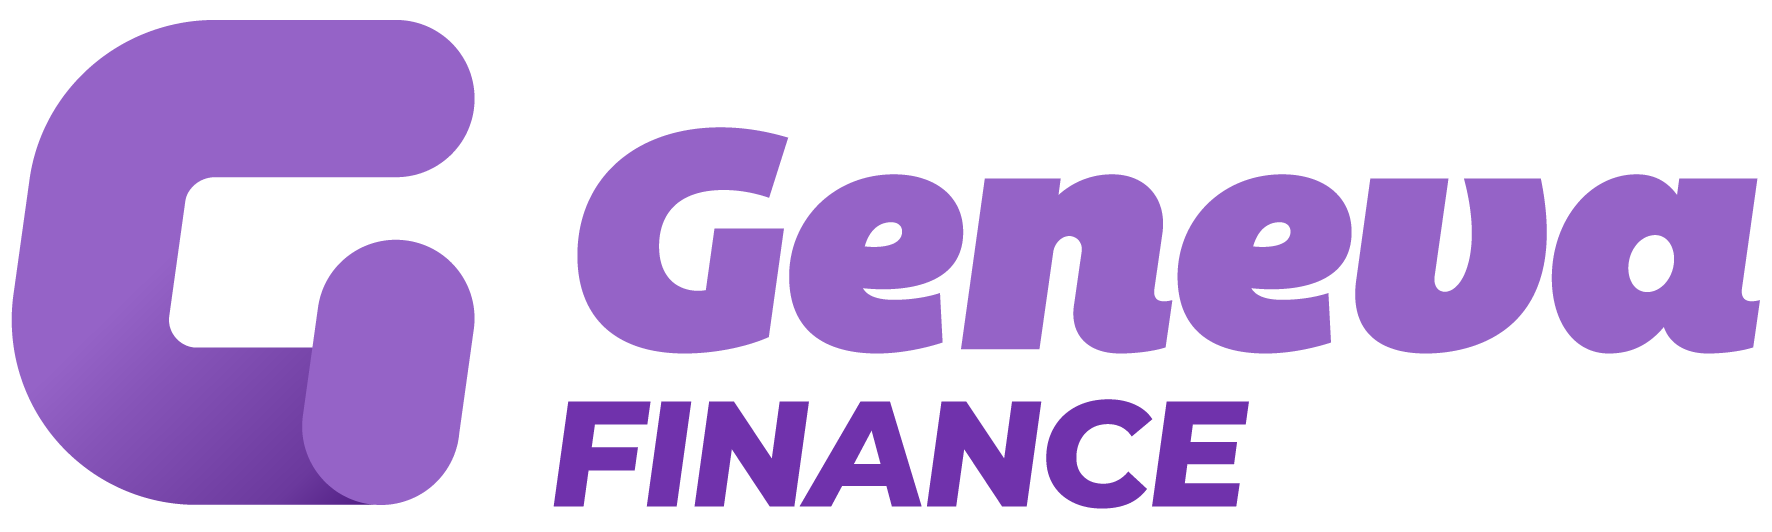 Geneva car finance